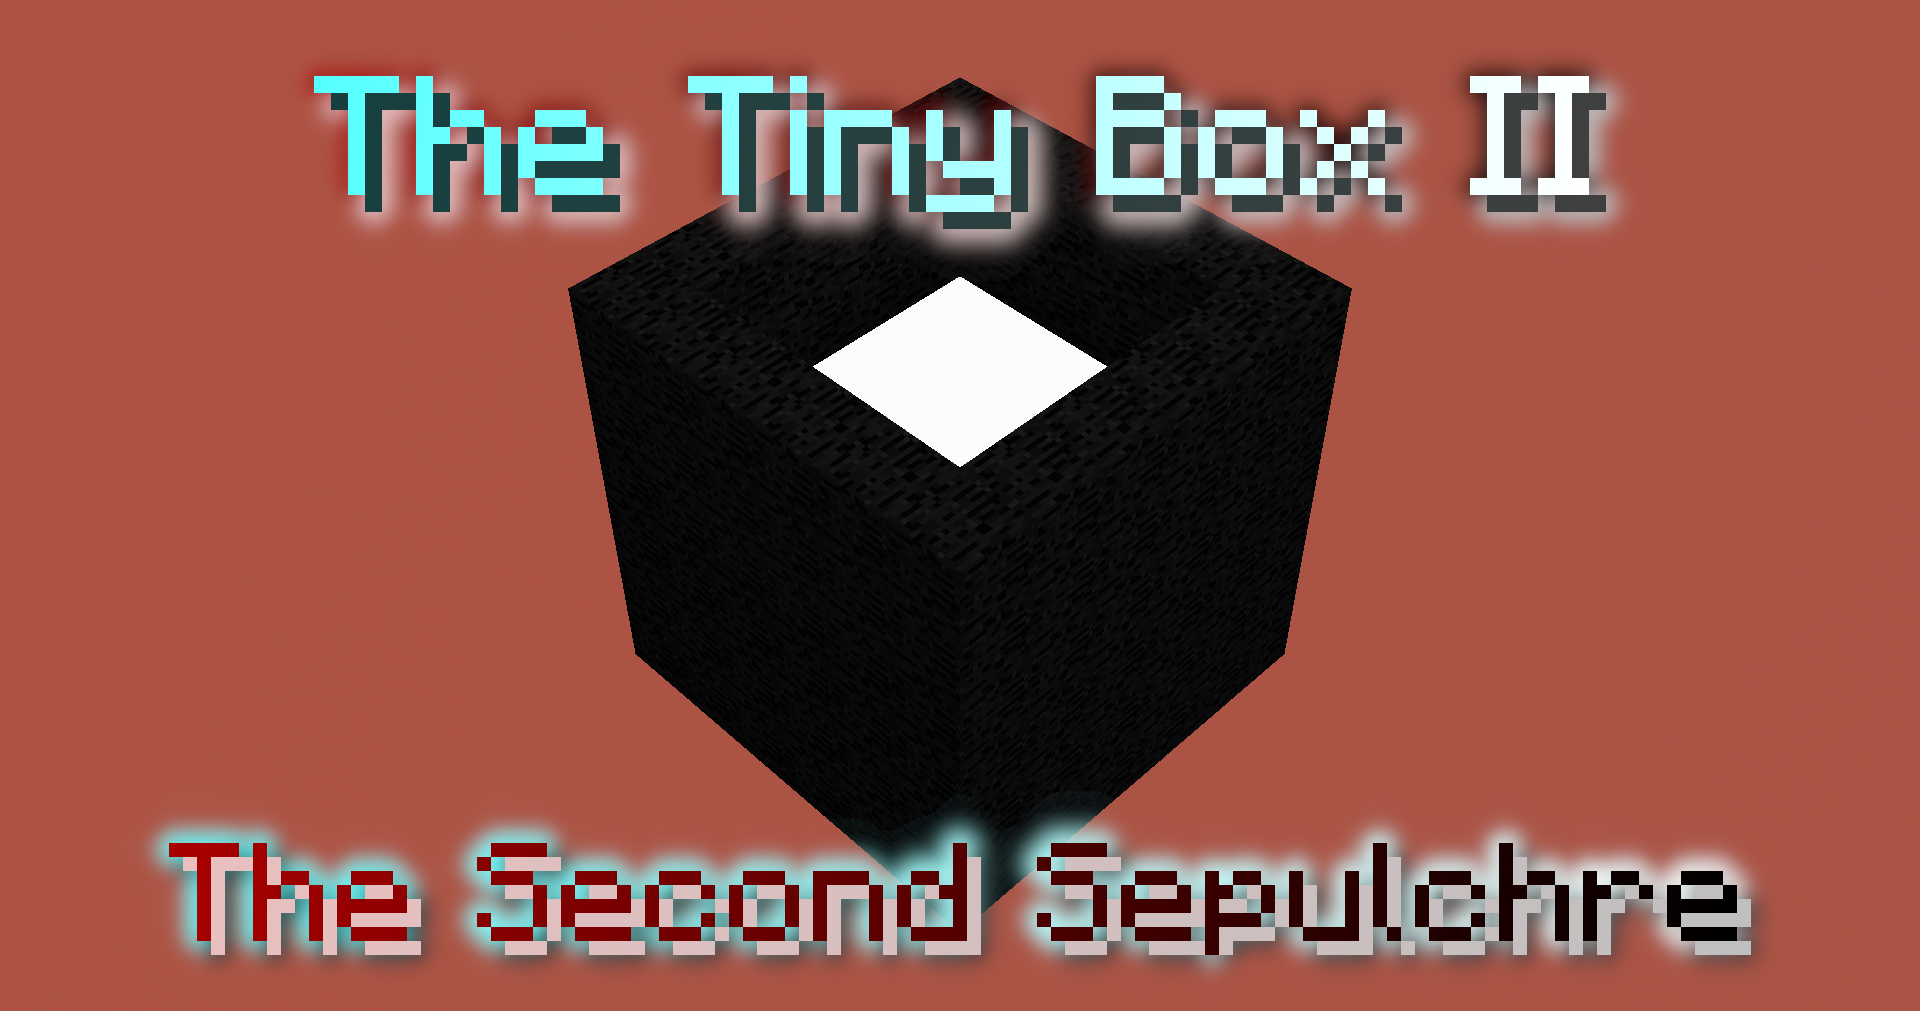 Descargar The Tiny Box II - The Second Sepulchre para Minecraft 1.15.2